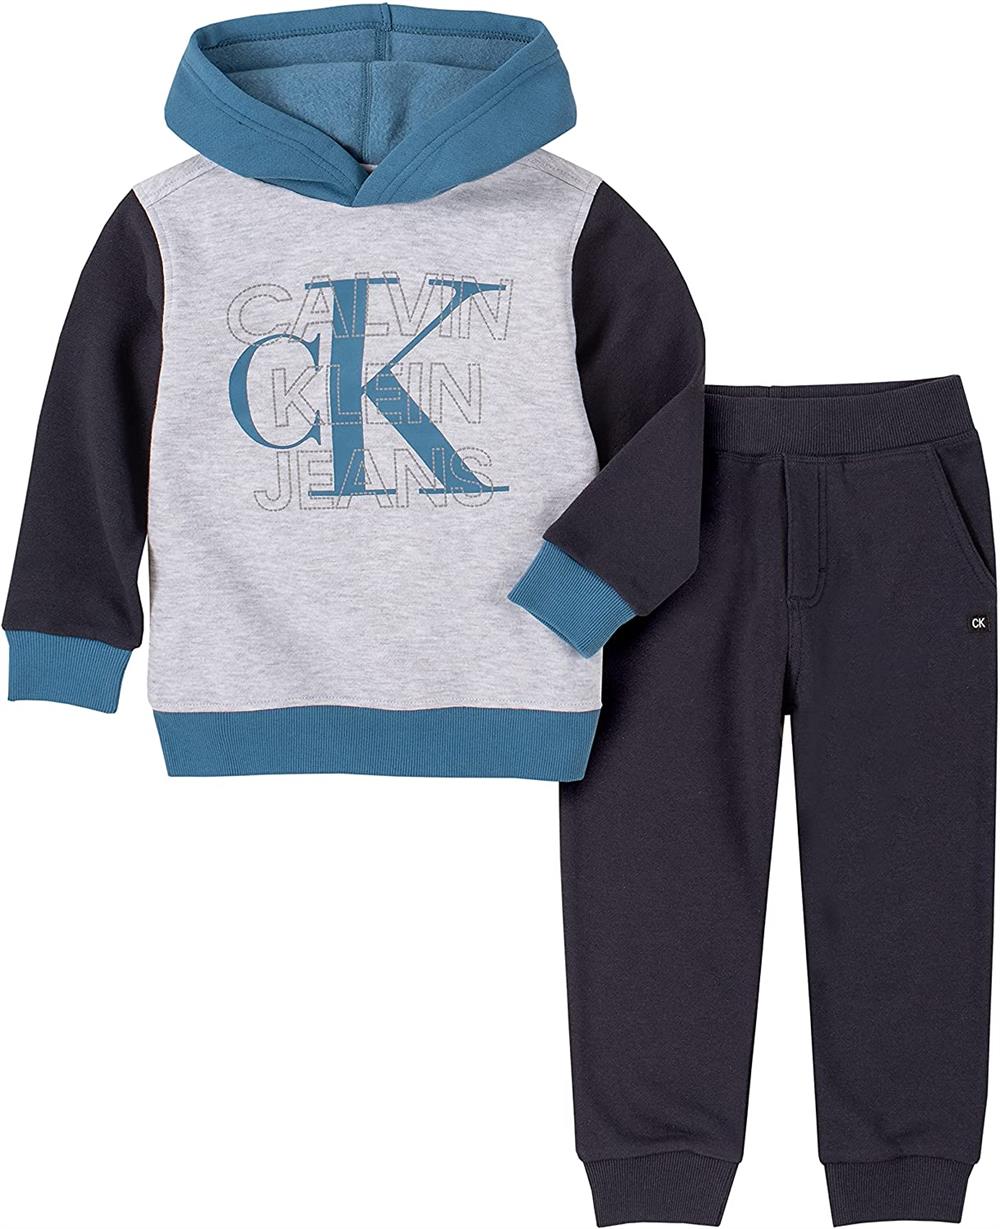 Calvin Klein Boys 8-20 2-Piece Hooded Sweatshirt Jogger Set